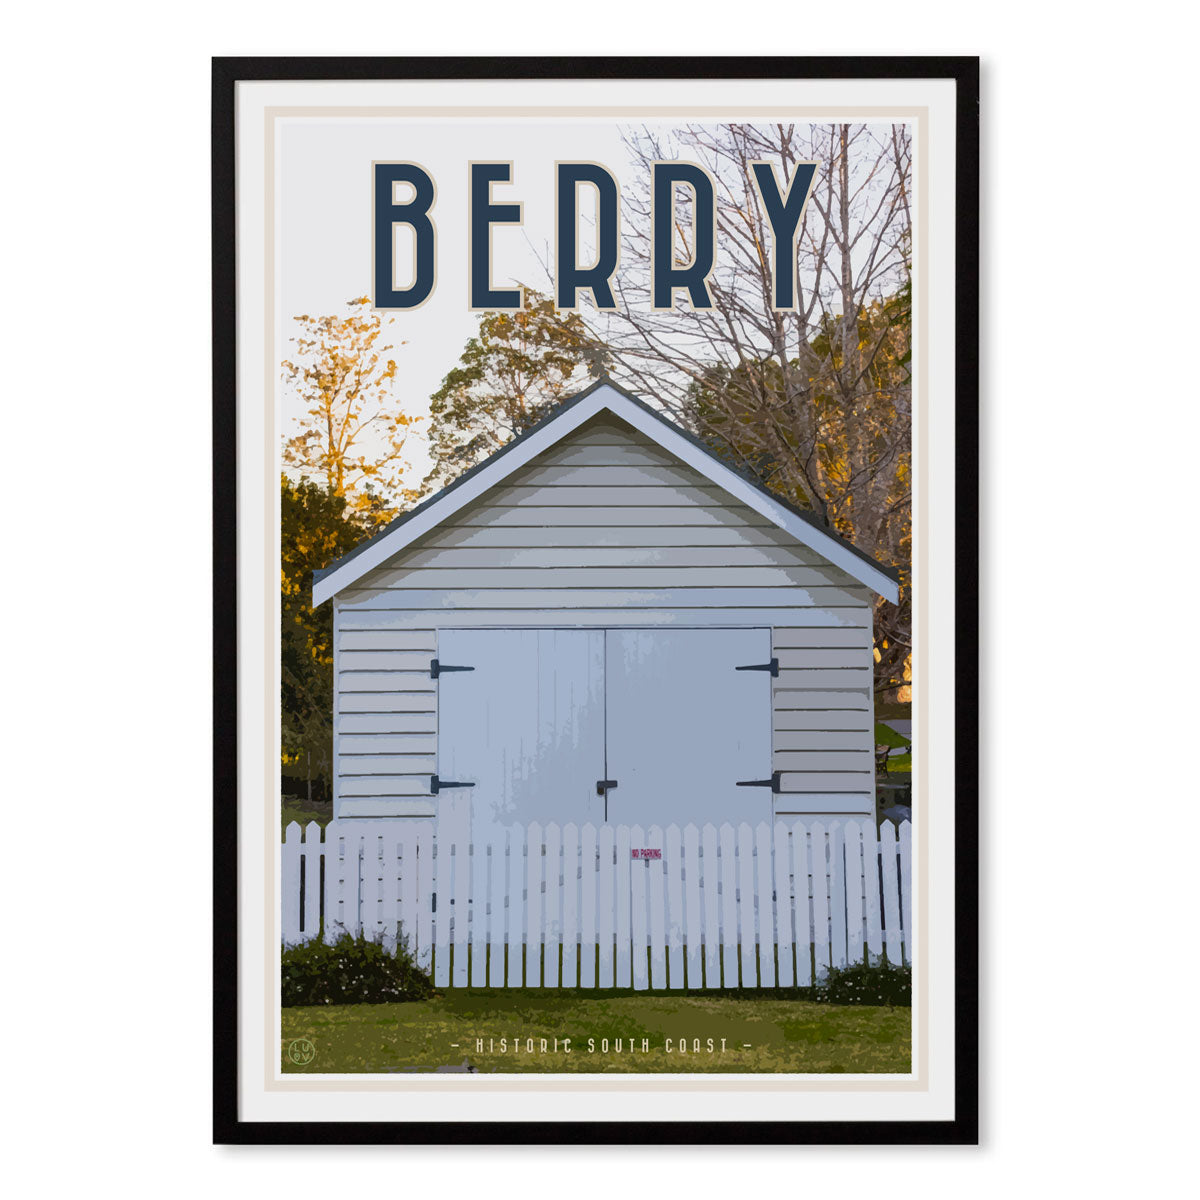 Berry south coast village travel style black framed print